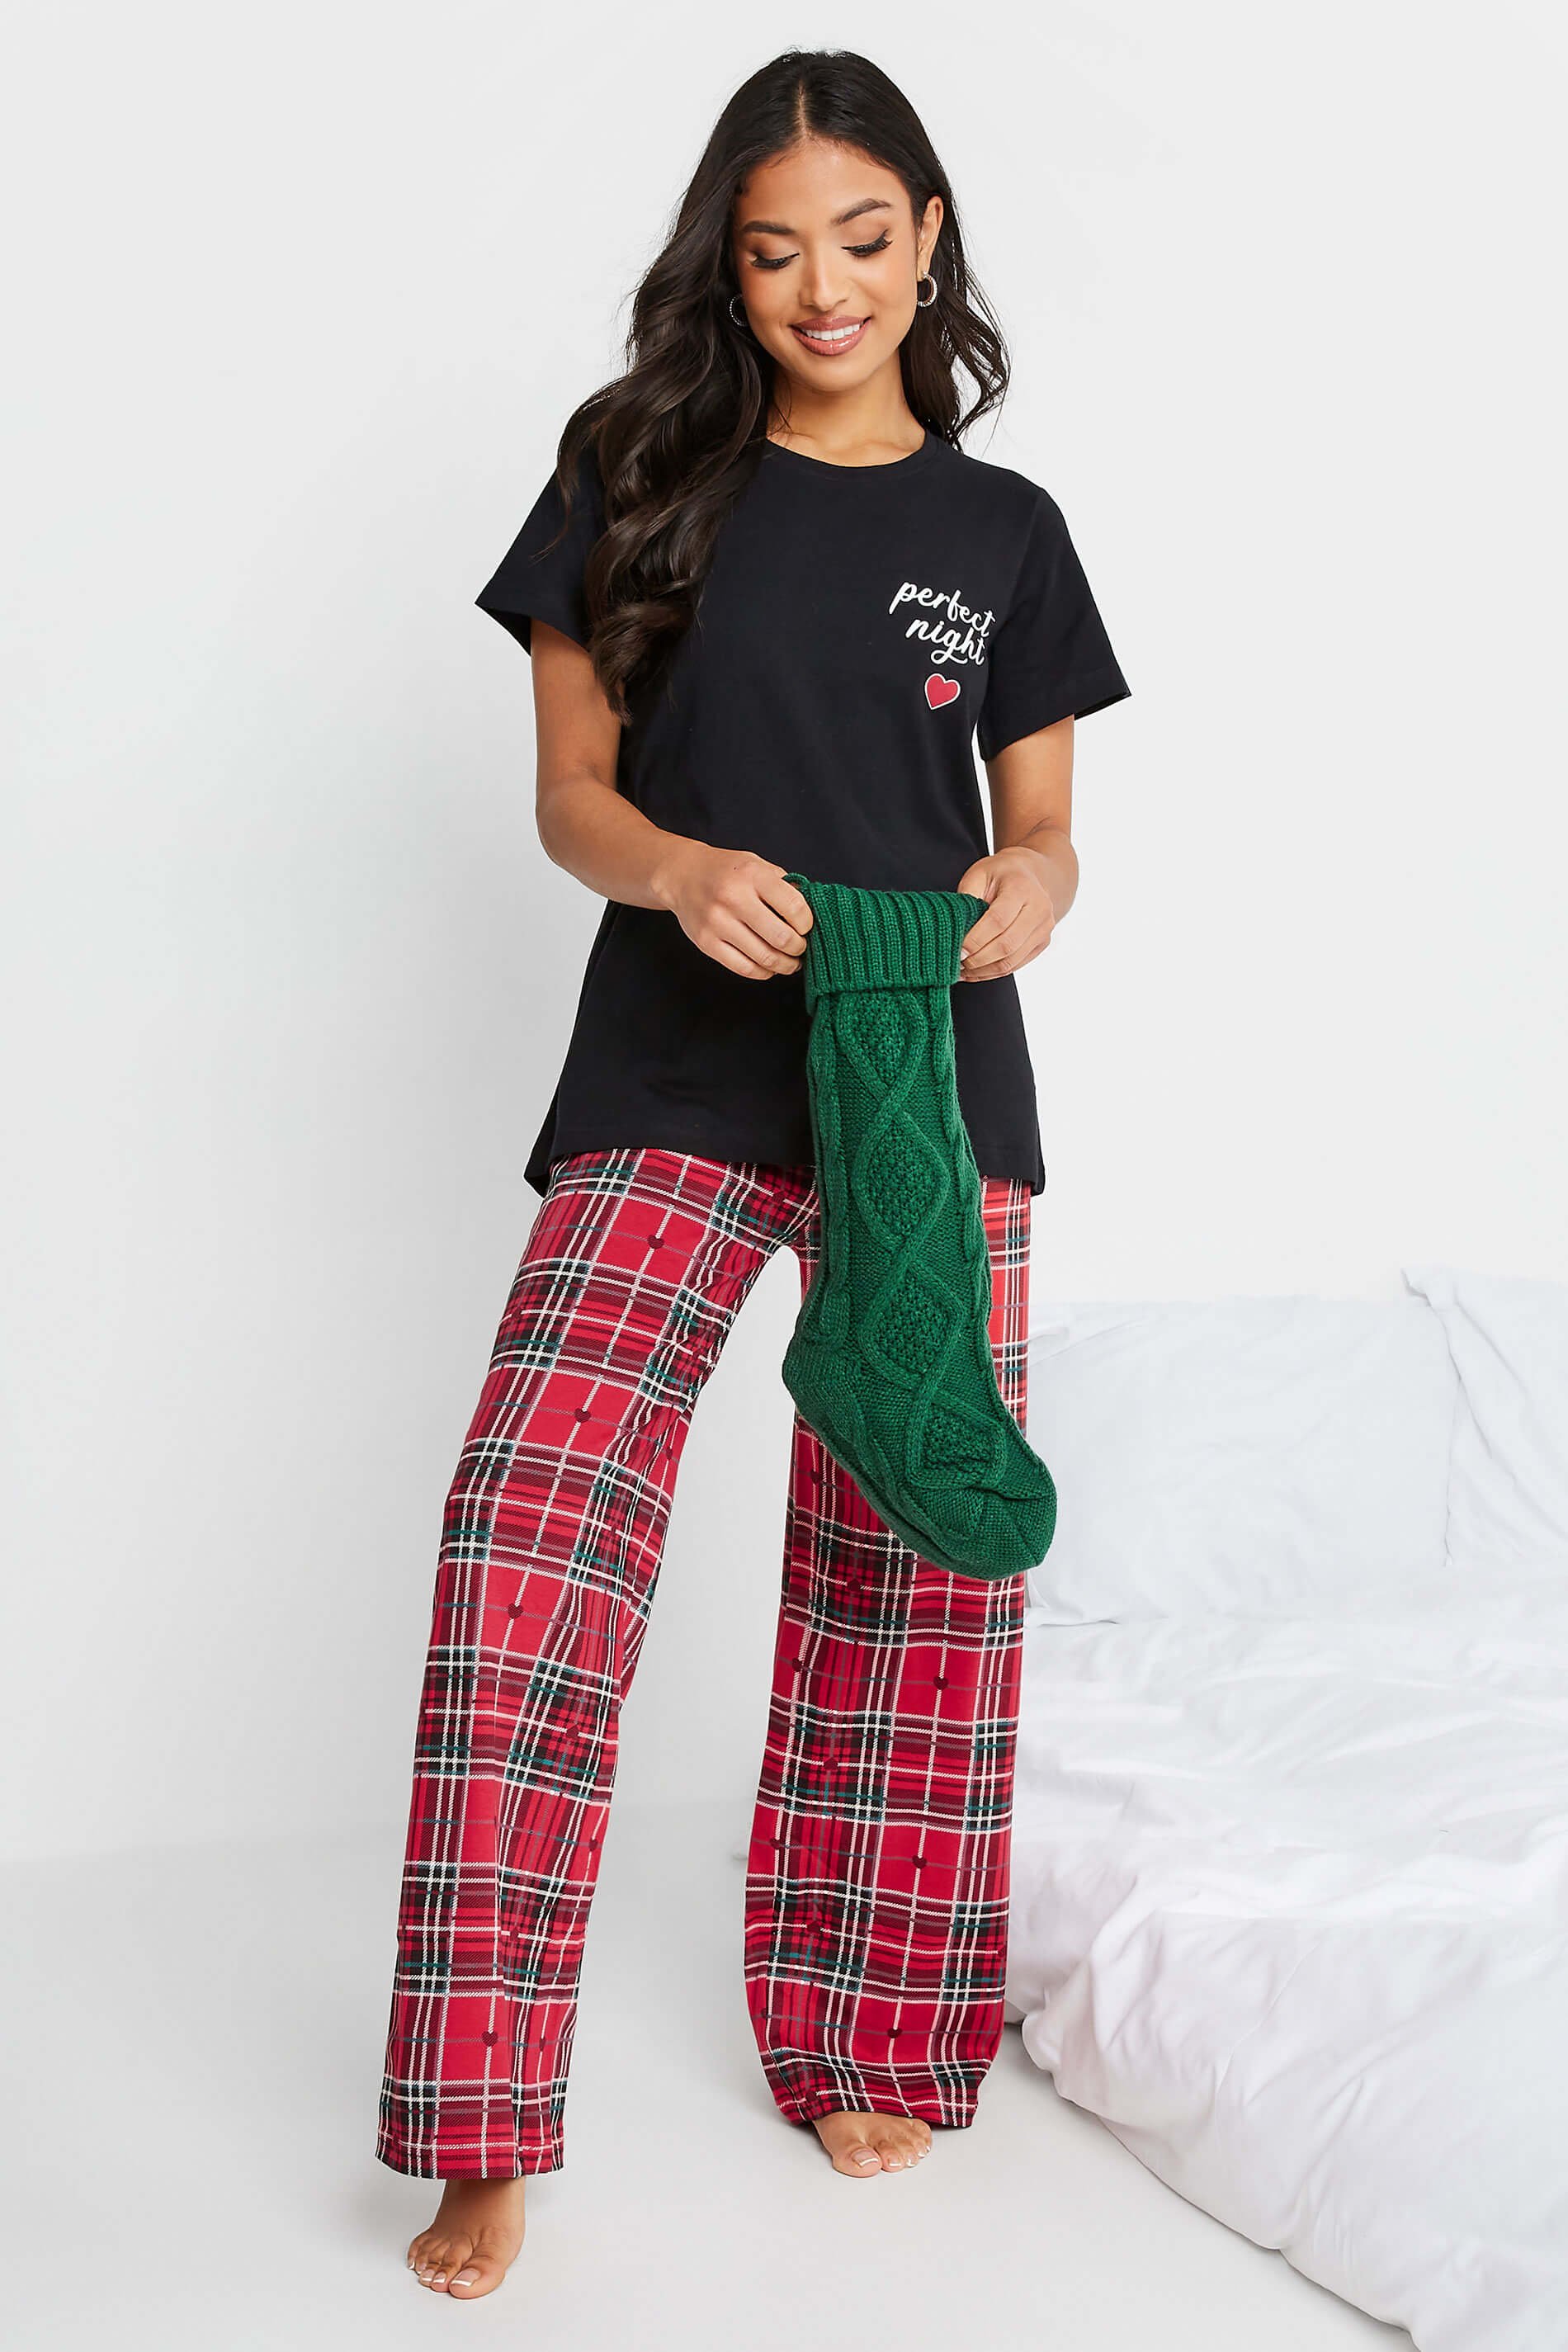 PixieGirl Petite 'Perfect Night' Pyjama Set £26.99